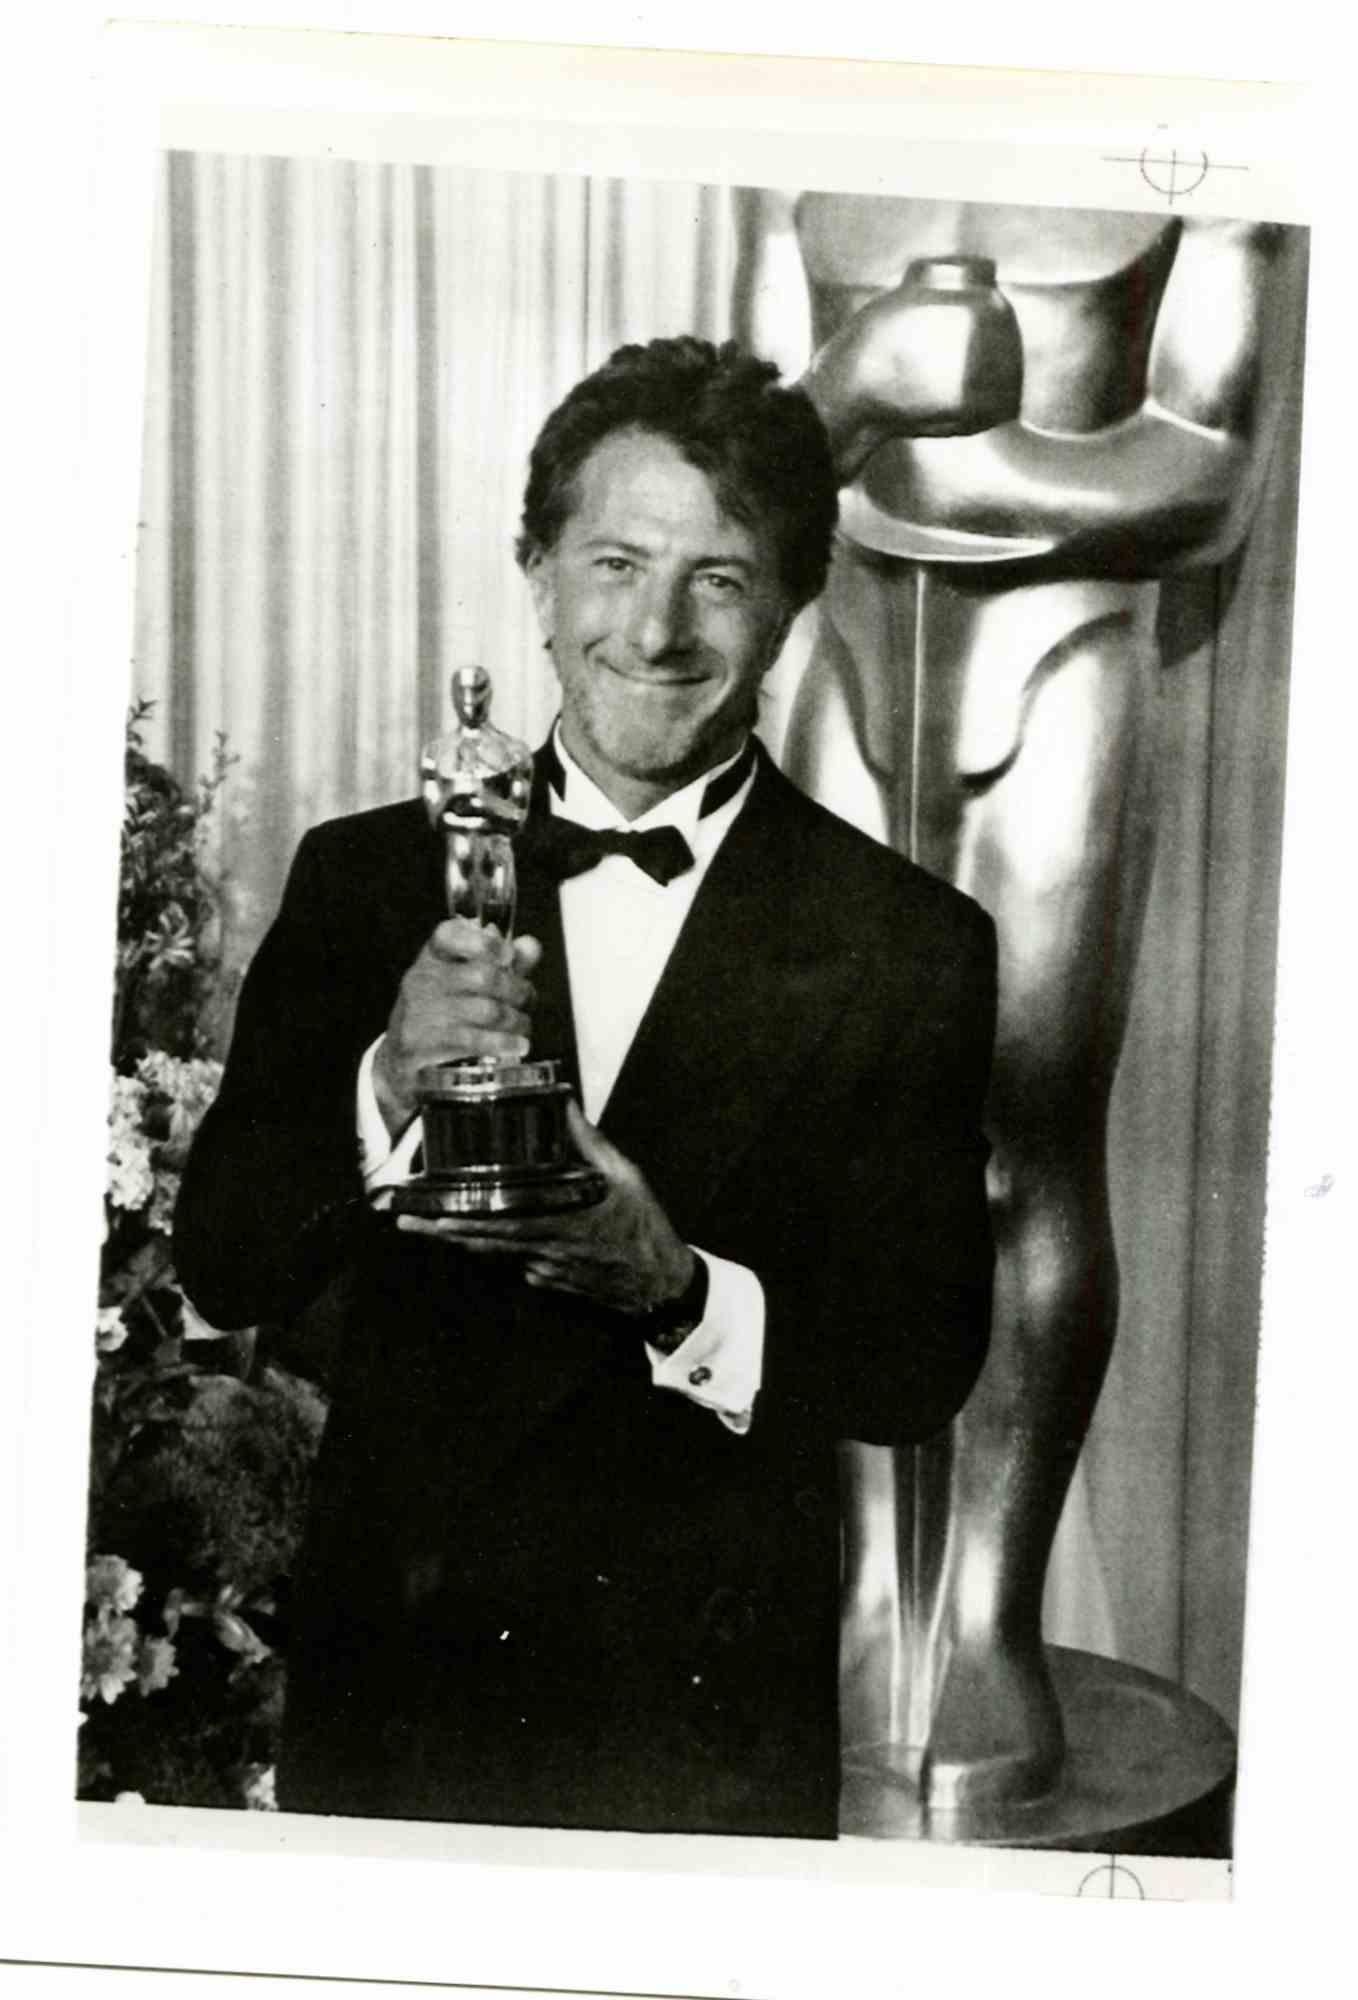 Unknown Portrait Photograph - Oscar winner Dustin Hoffman at Academy Awards - Vintage photo - 1989